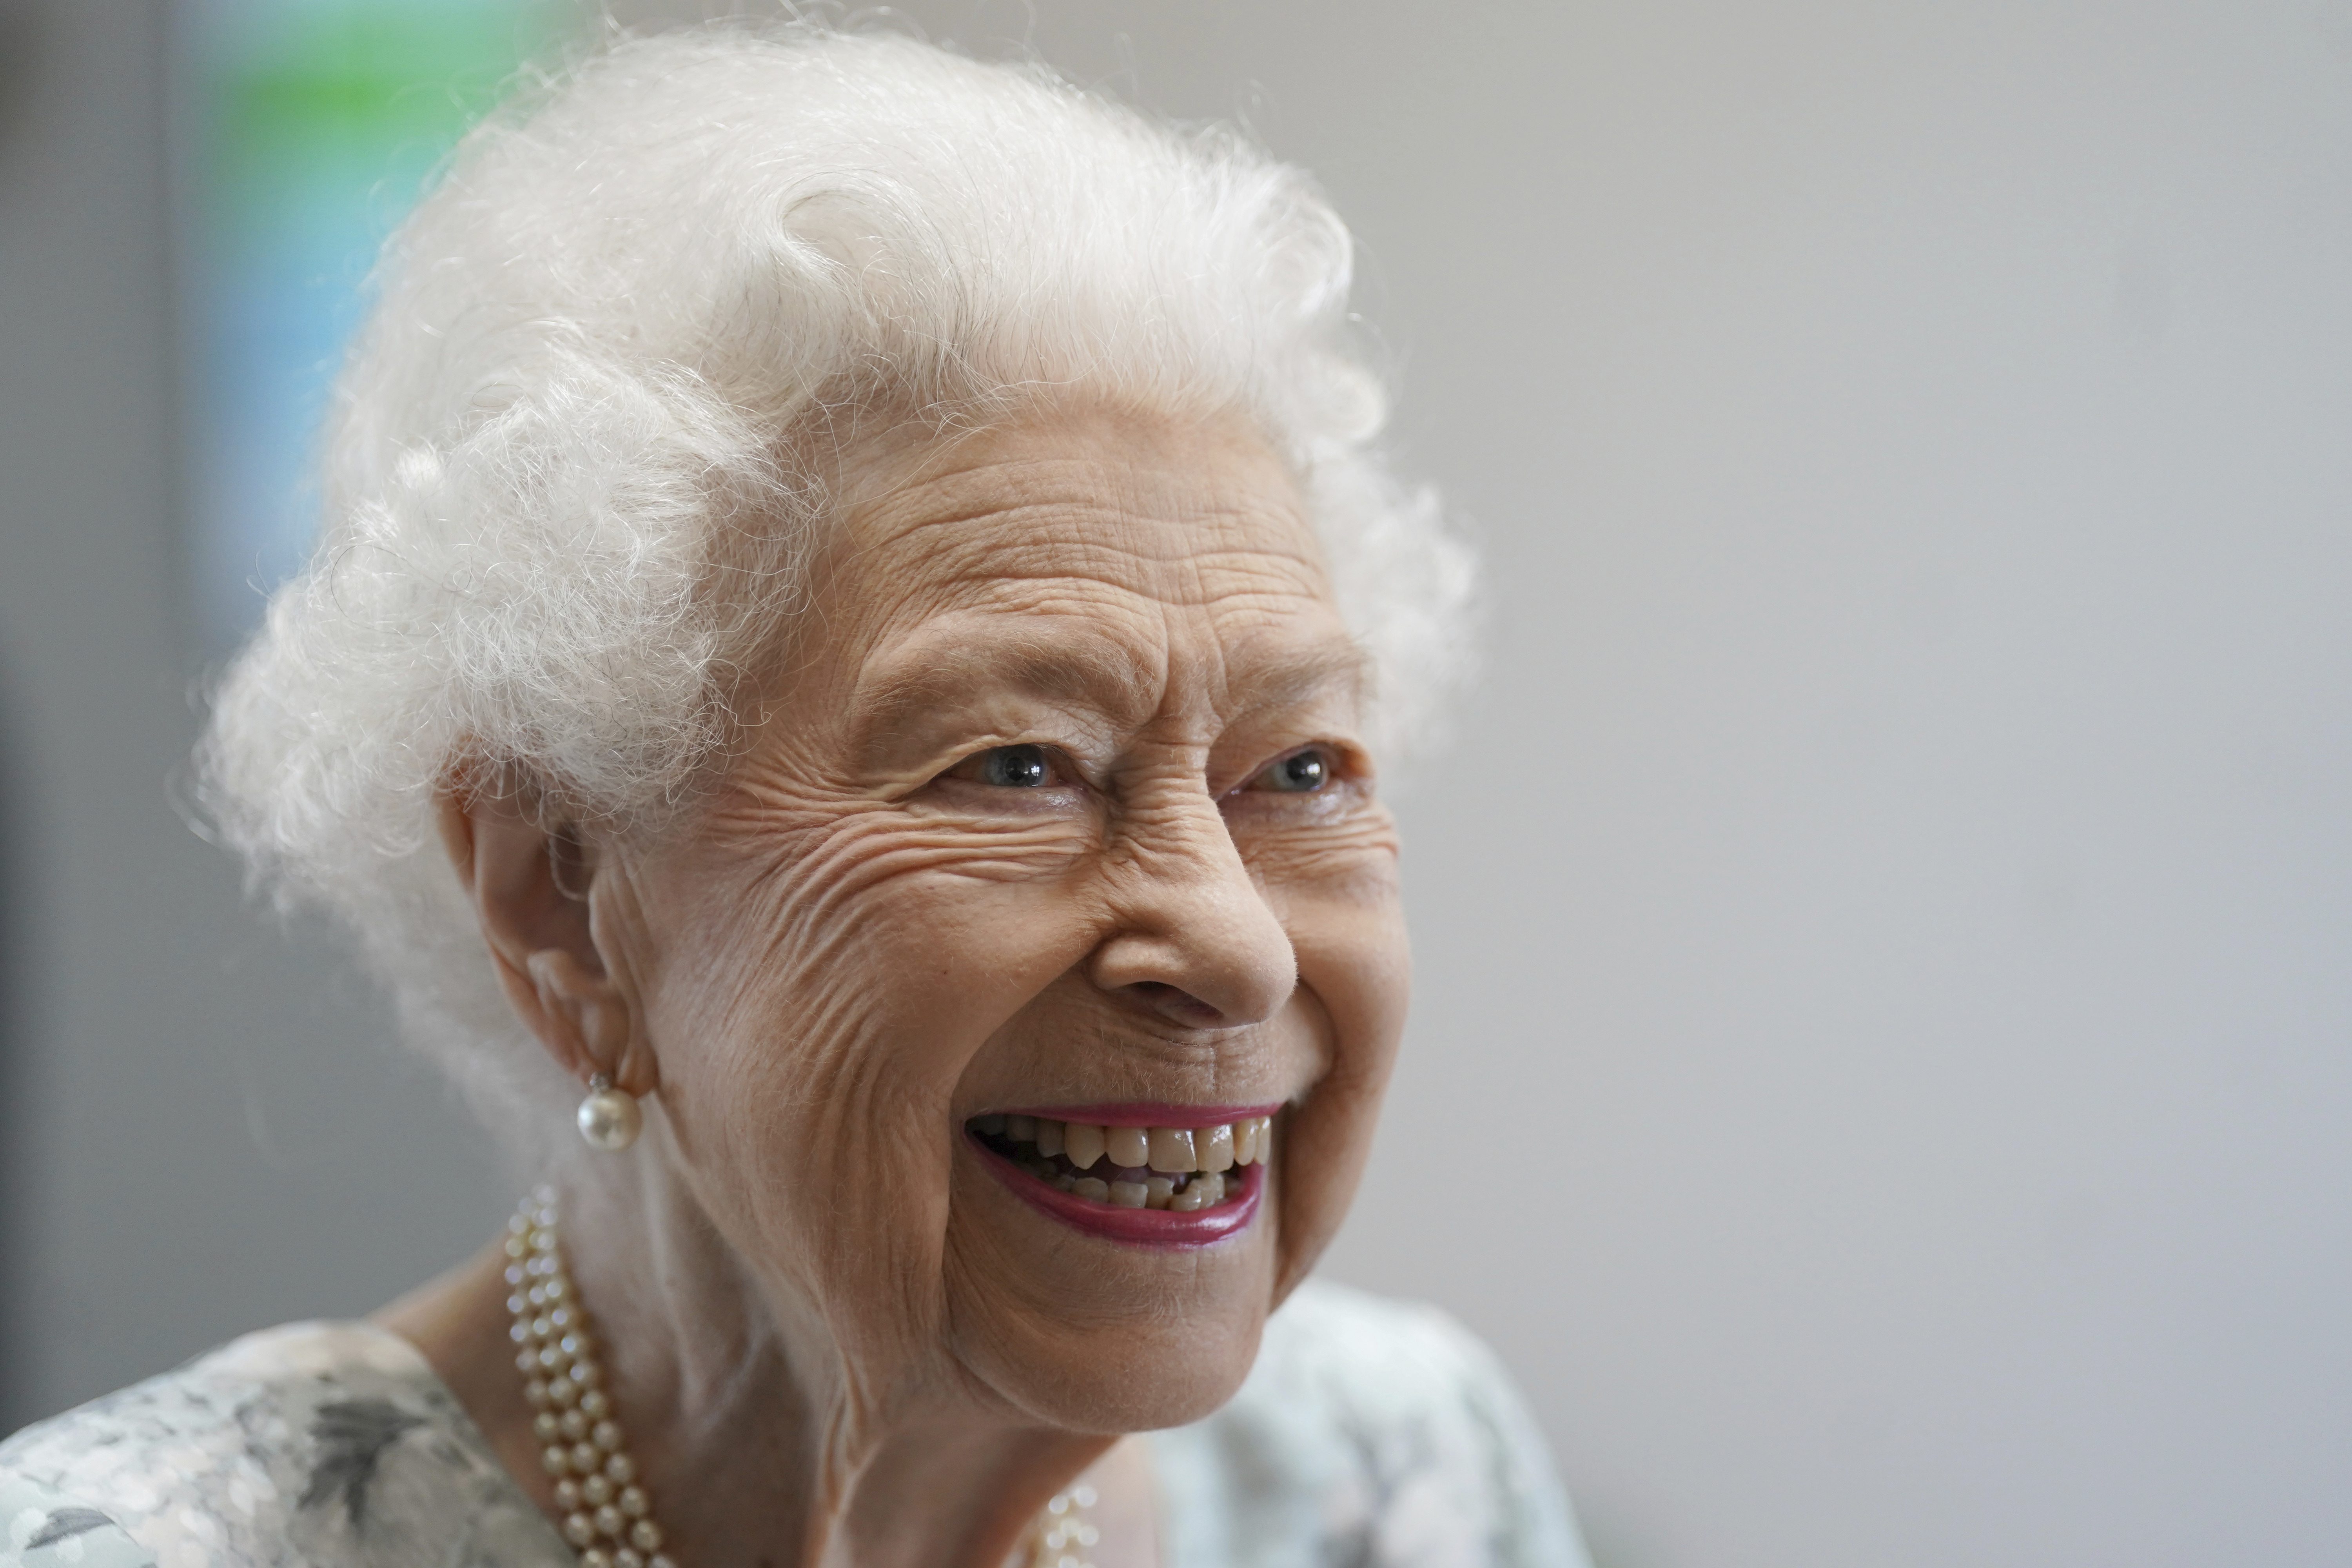 ‘Selfless service’: Ontario mourns after death of Queen Elizabeth II